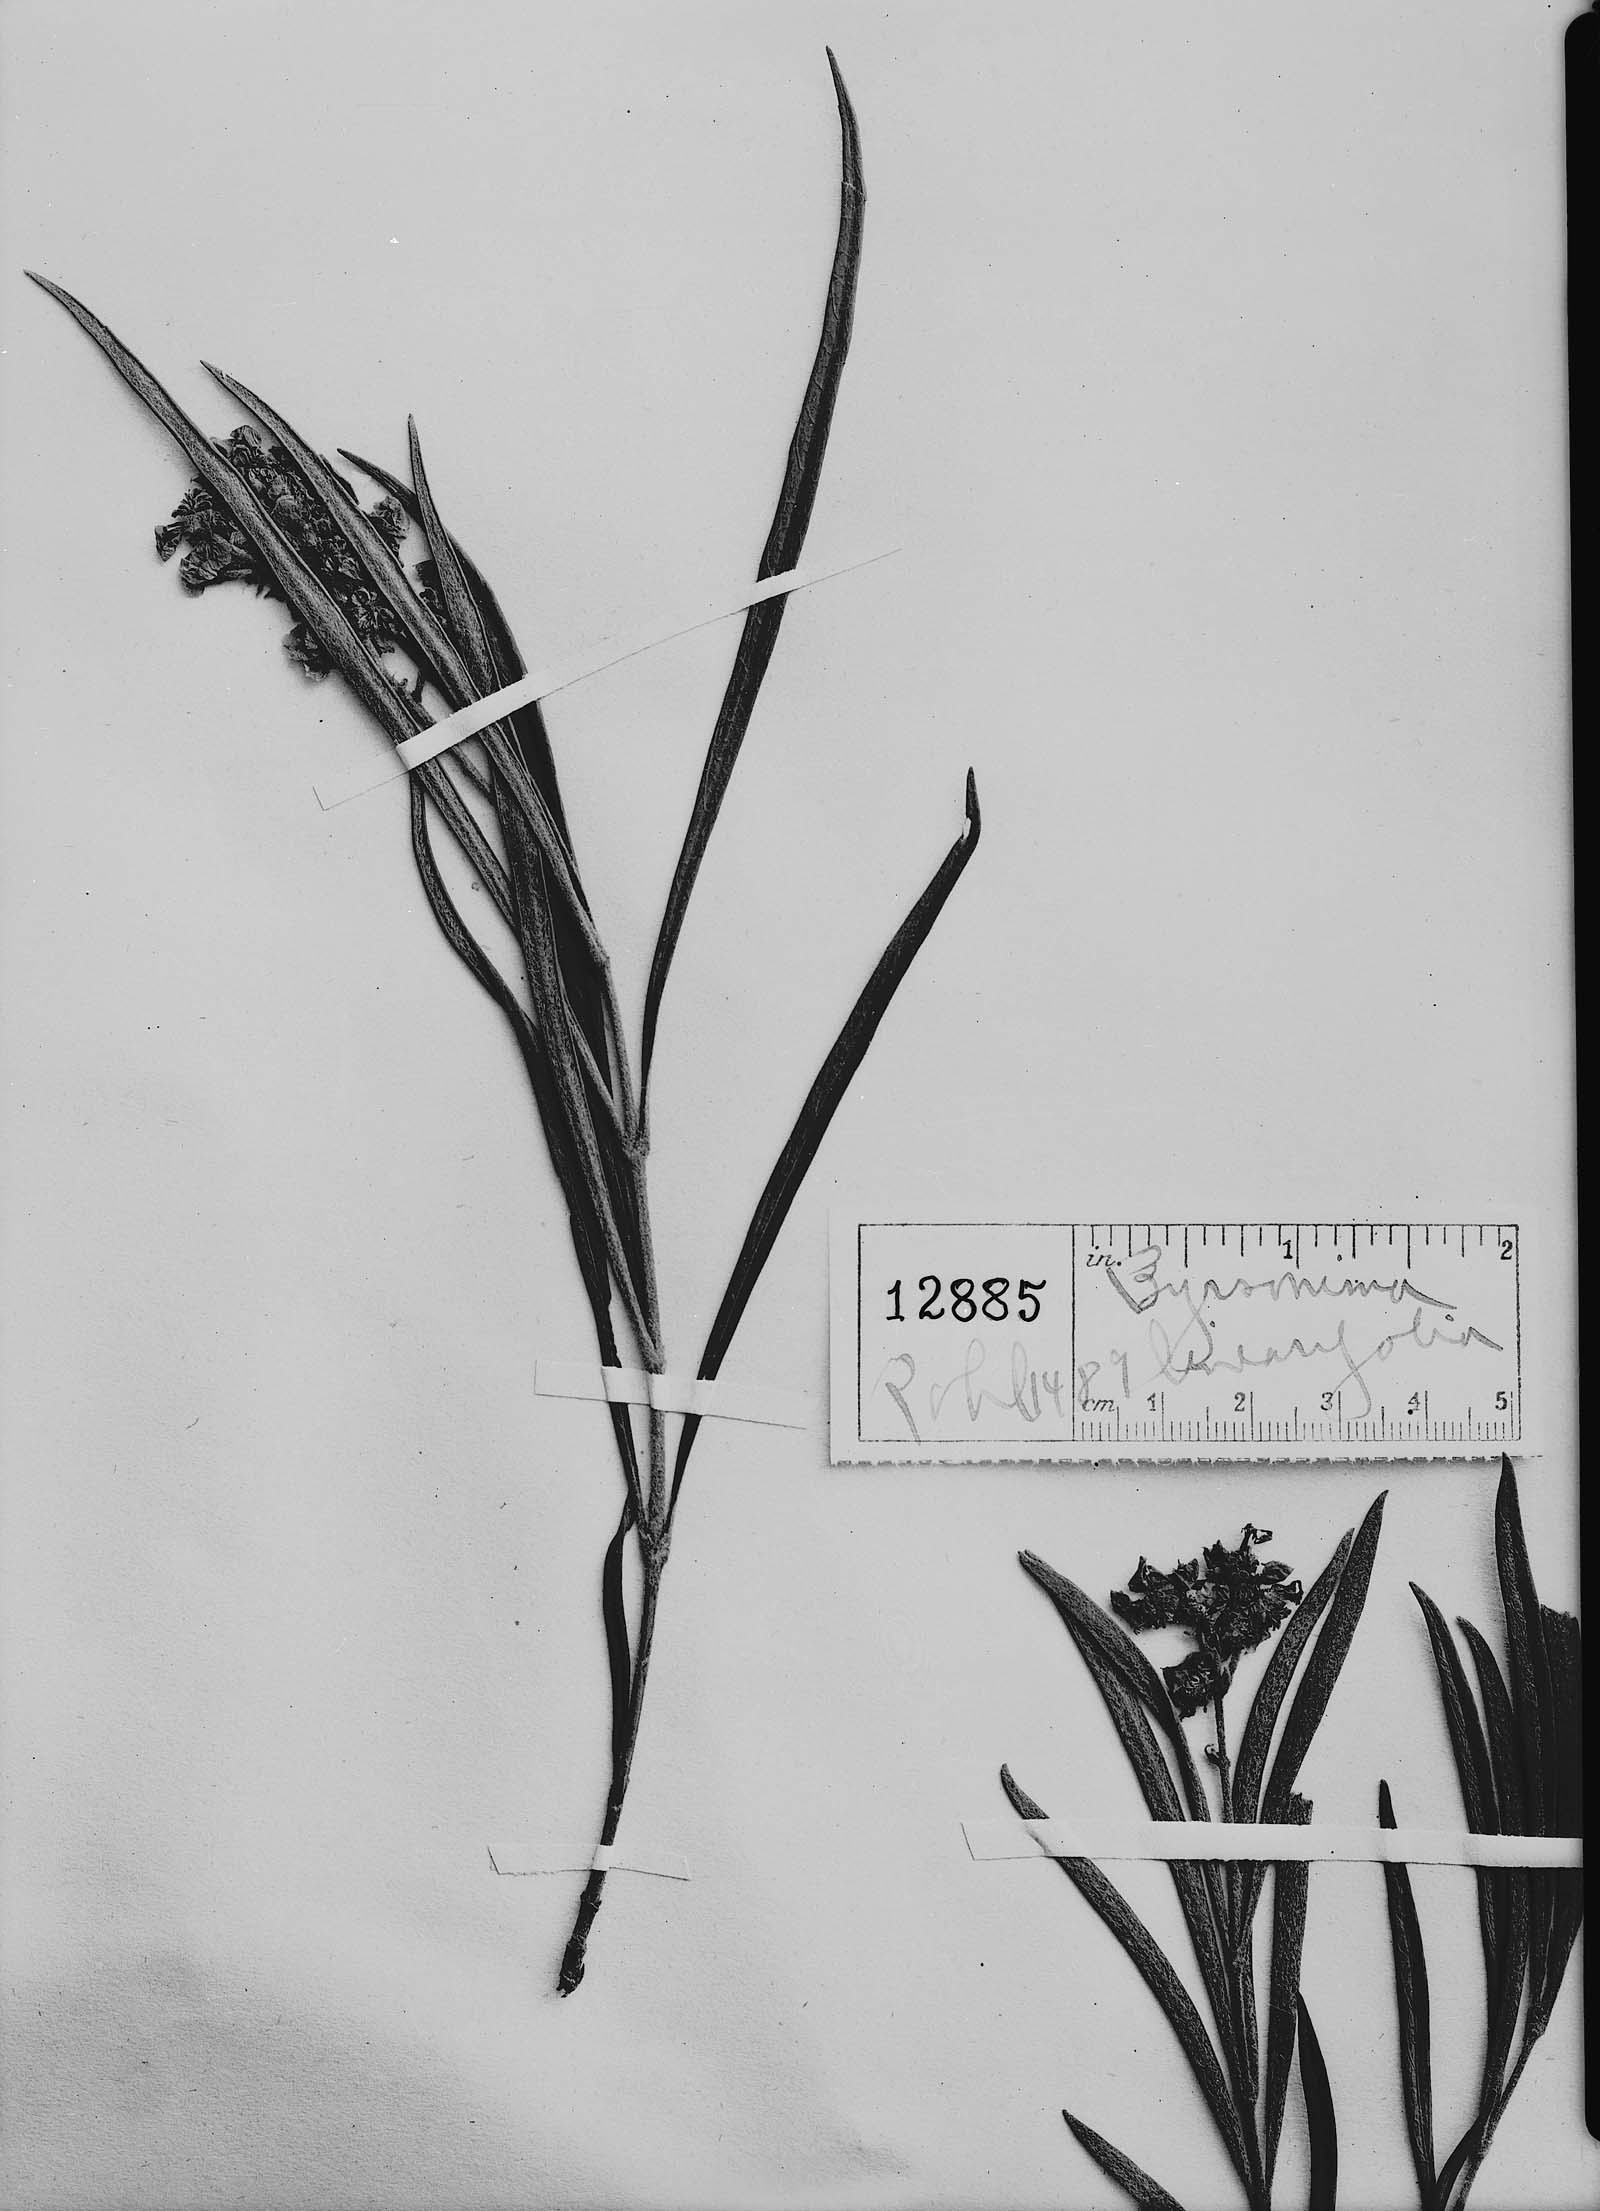 Byrsonima linearifolia image